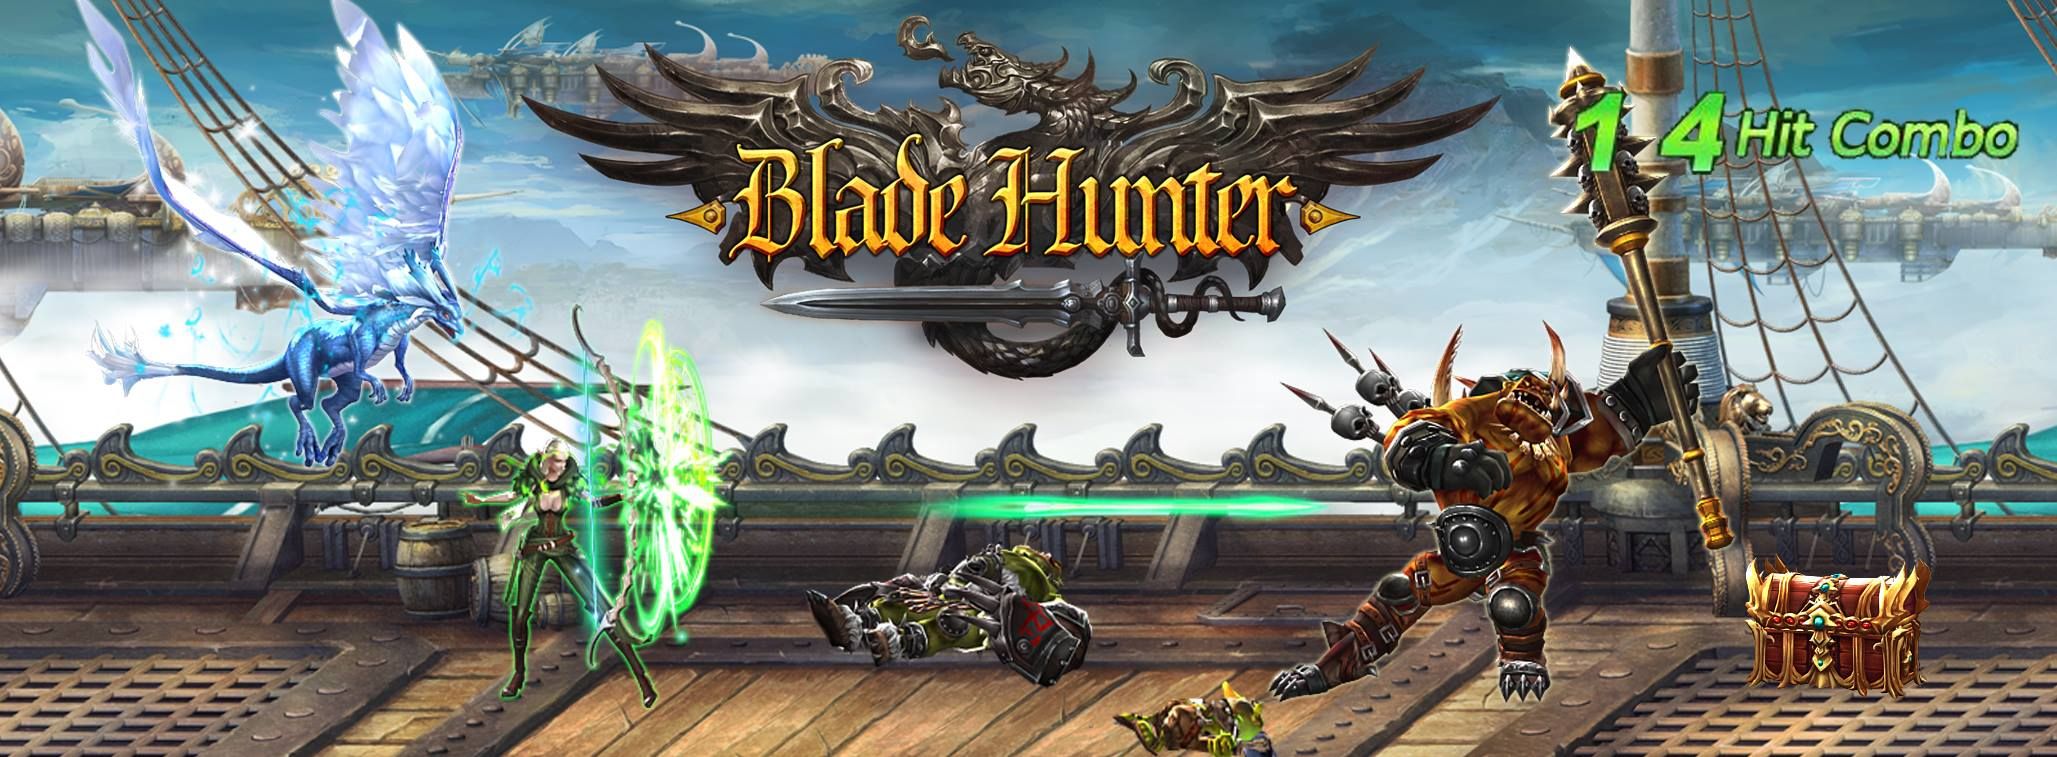 blade-hunter-action-browser-mo-games-screenshot-1.jpg